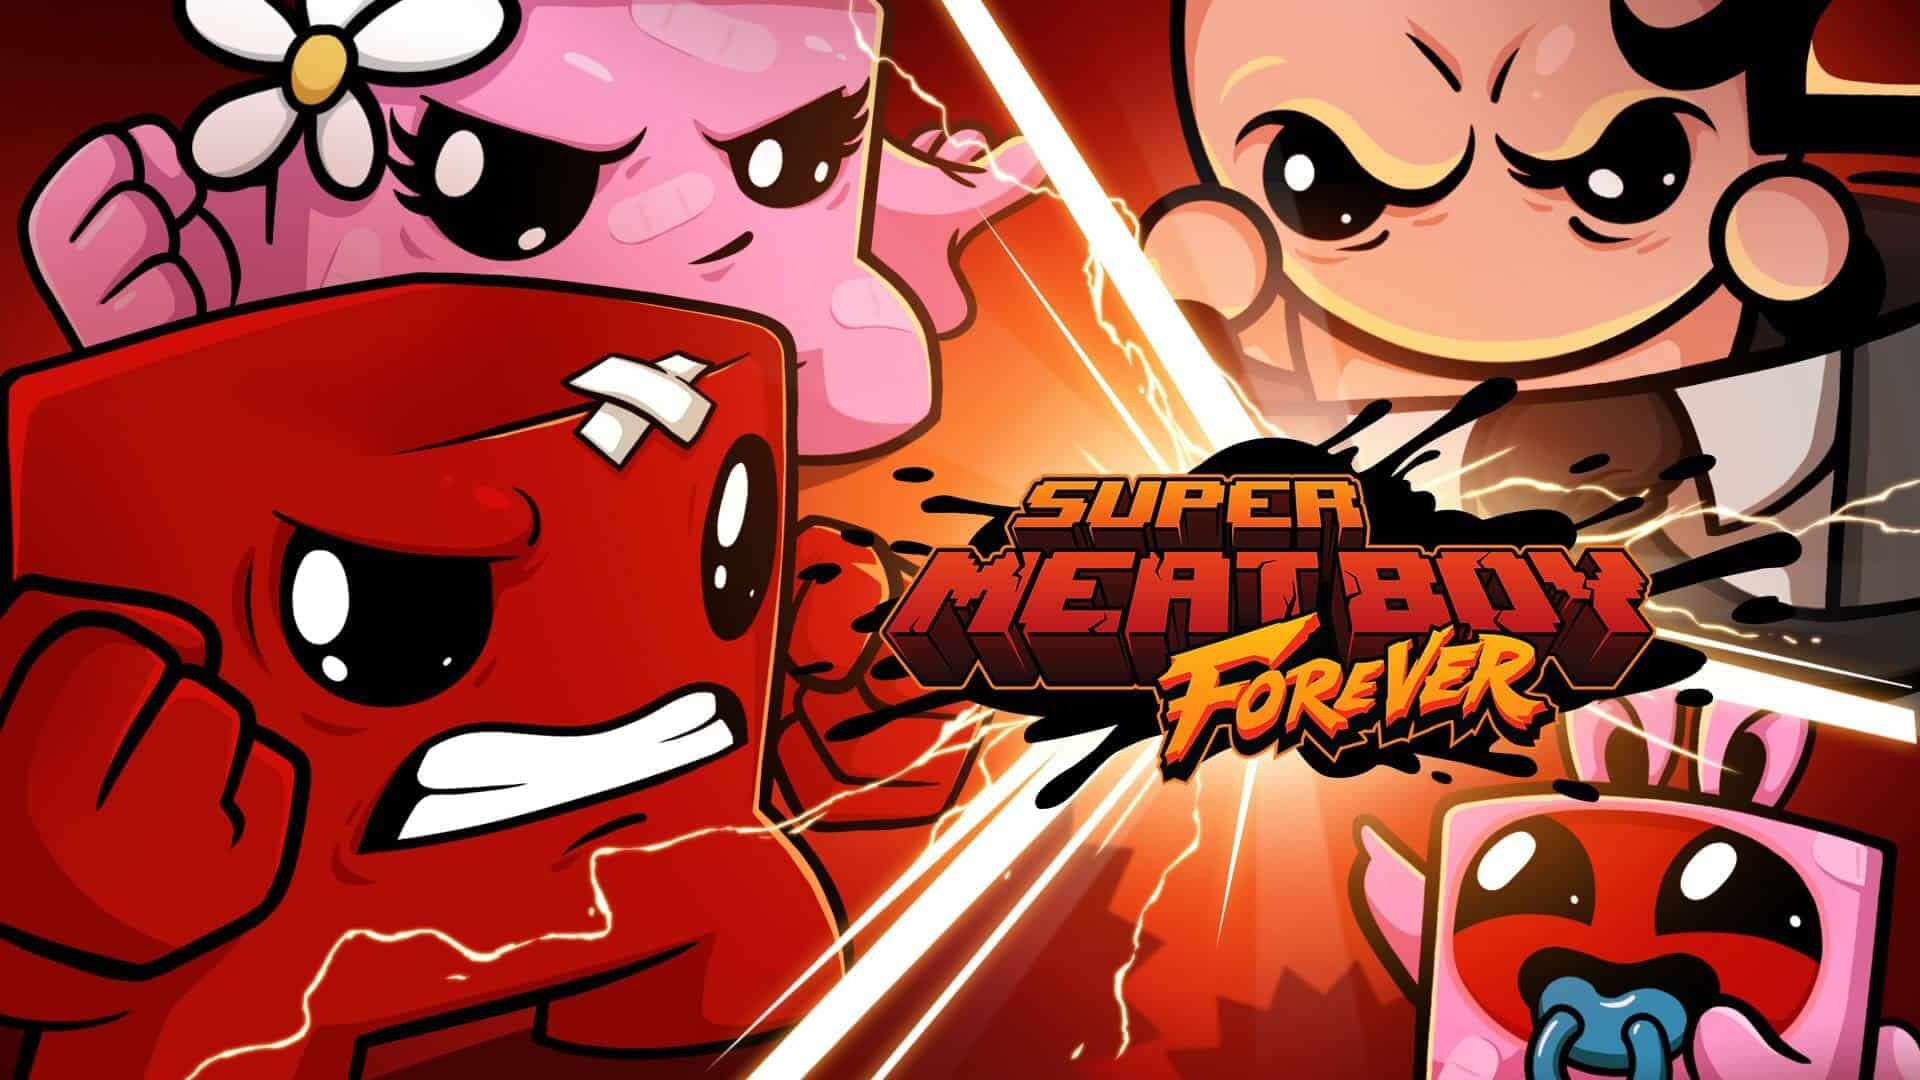 Super Meat Boy Forever, una patch mira a migliorare le prestazioni